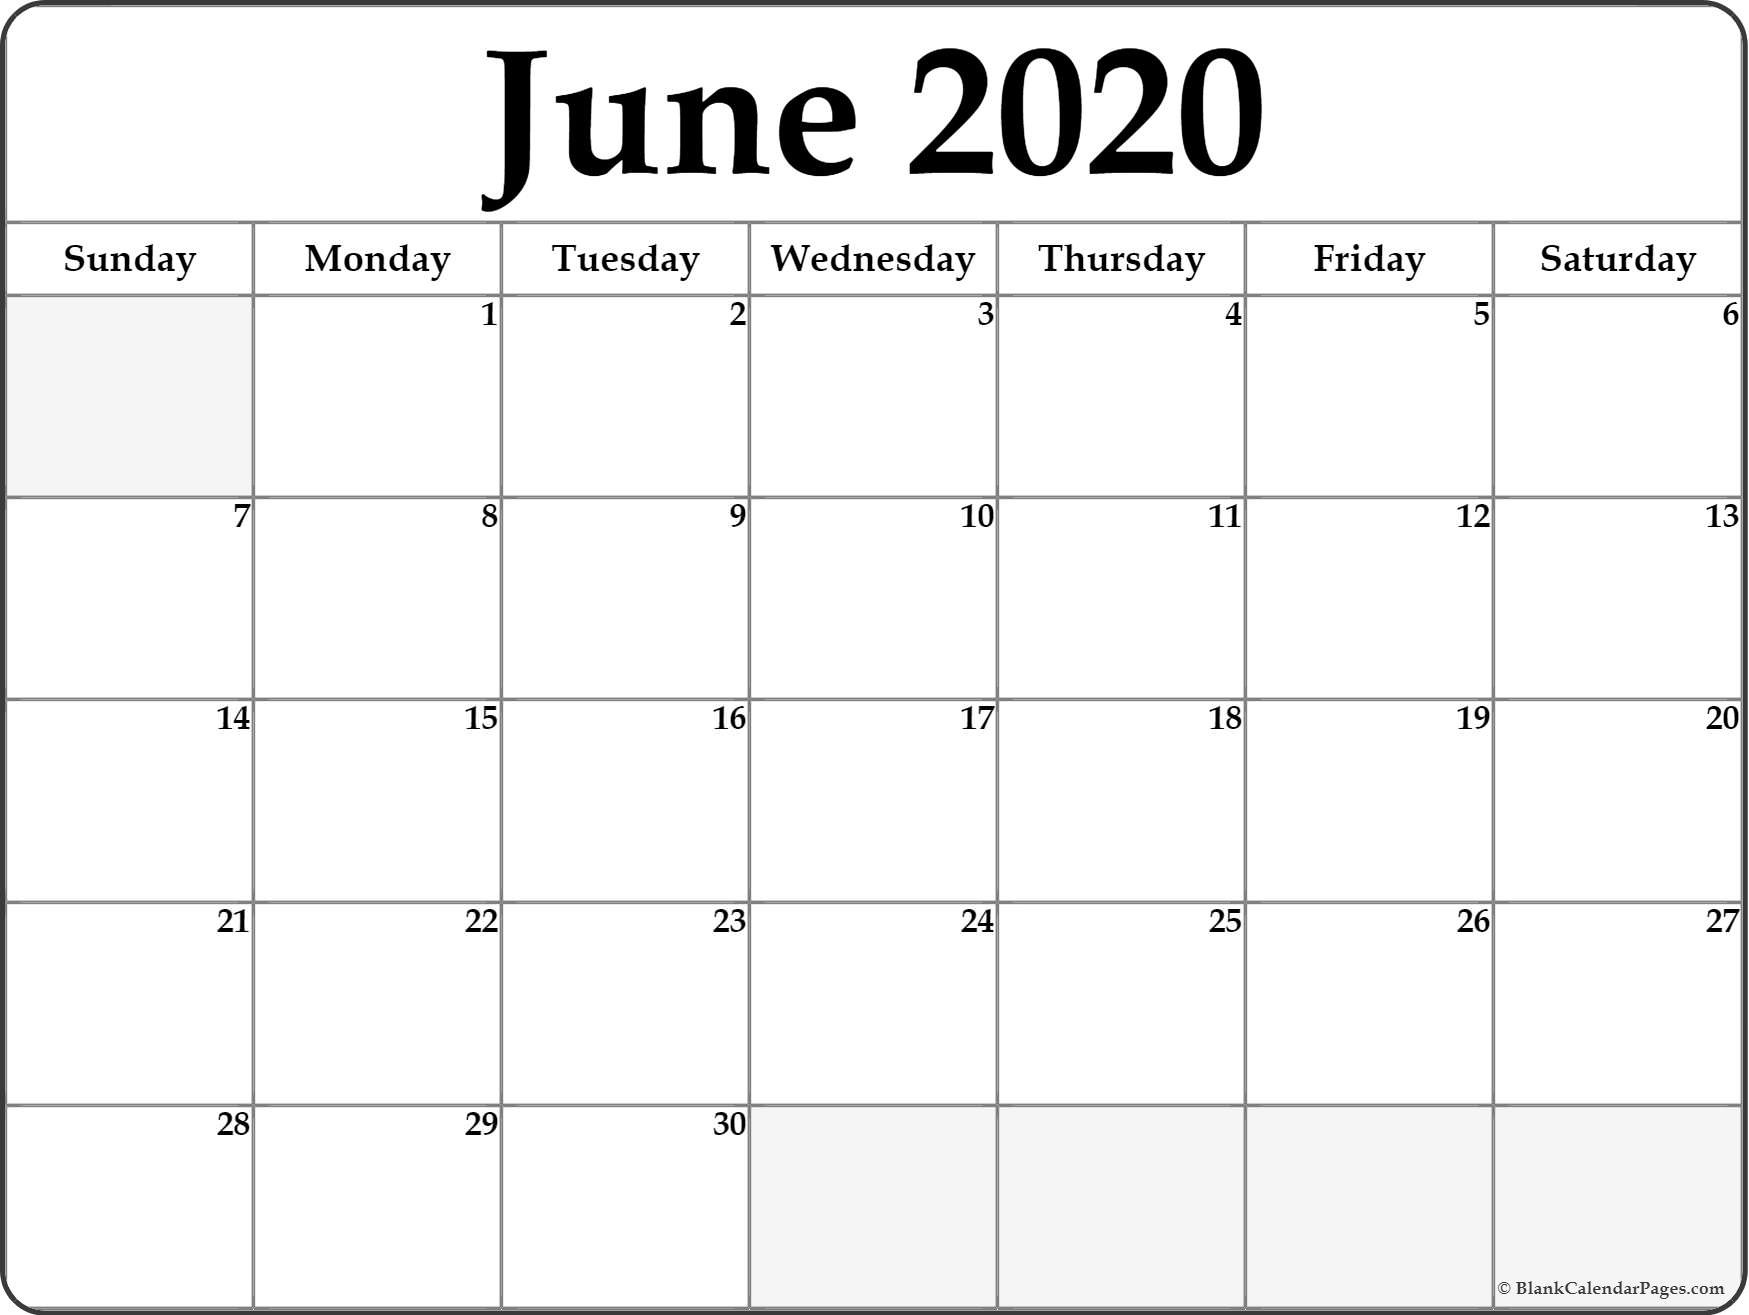 CAL=June 2020 calendar